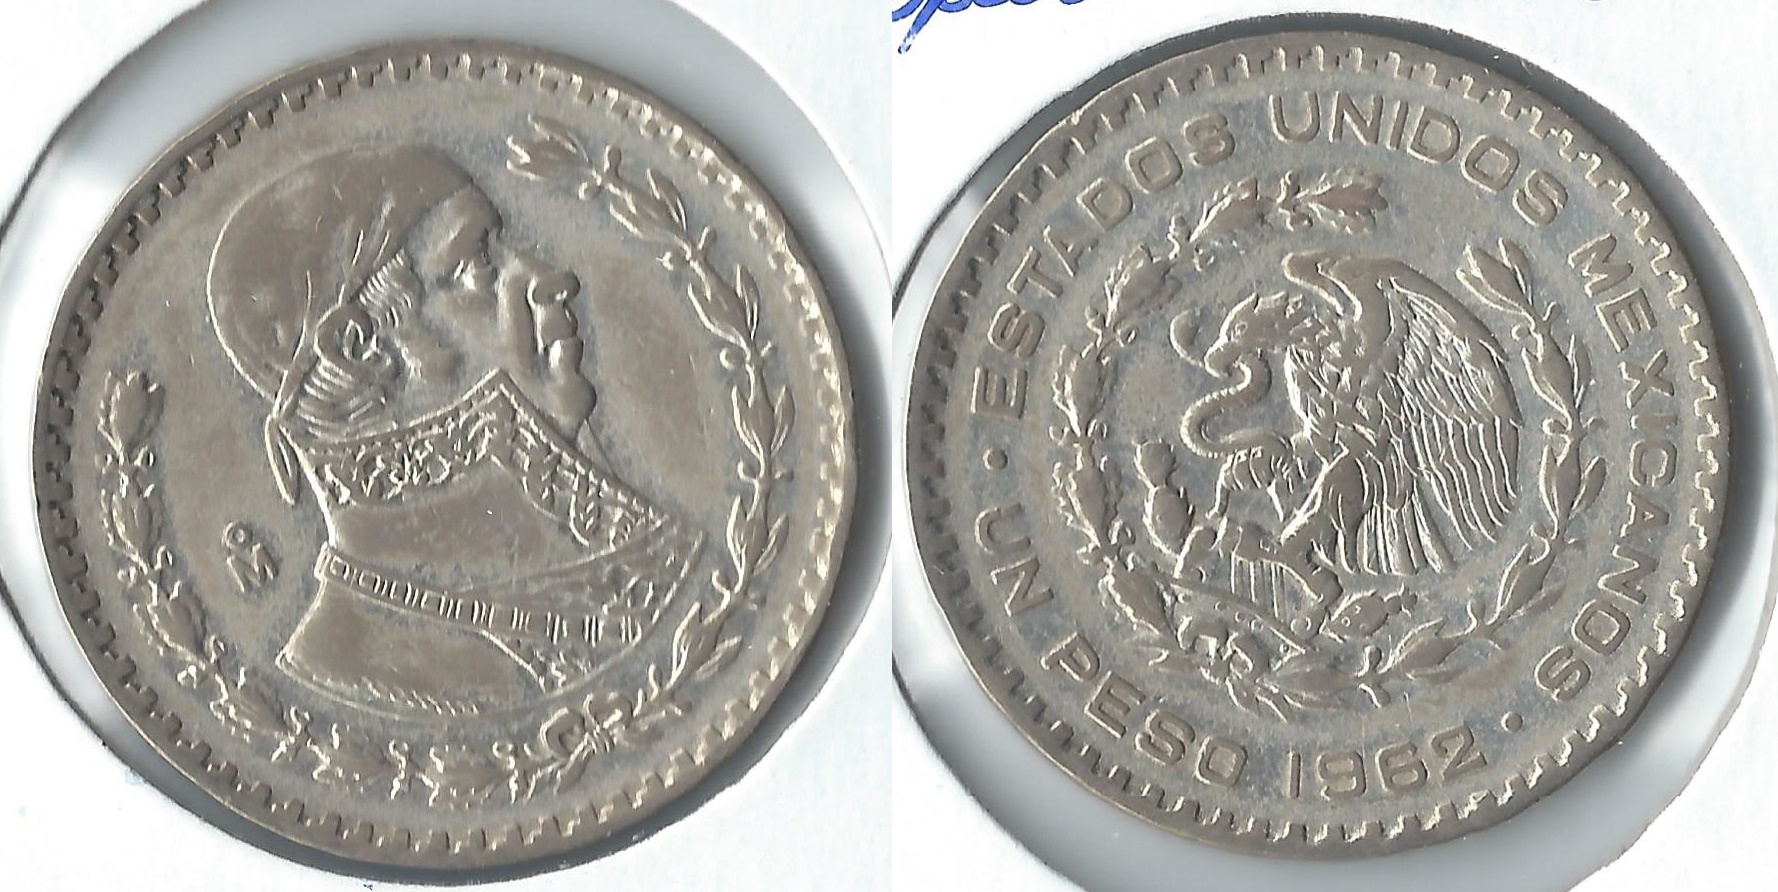 1962 mexico 1 peso.jpg